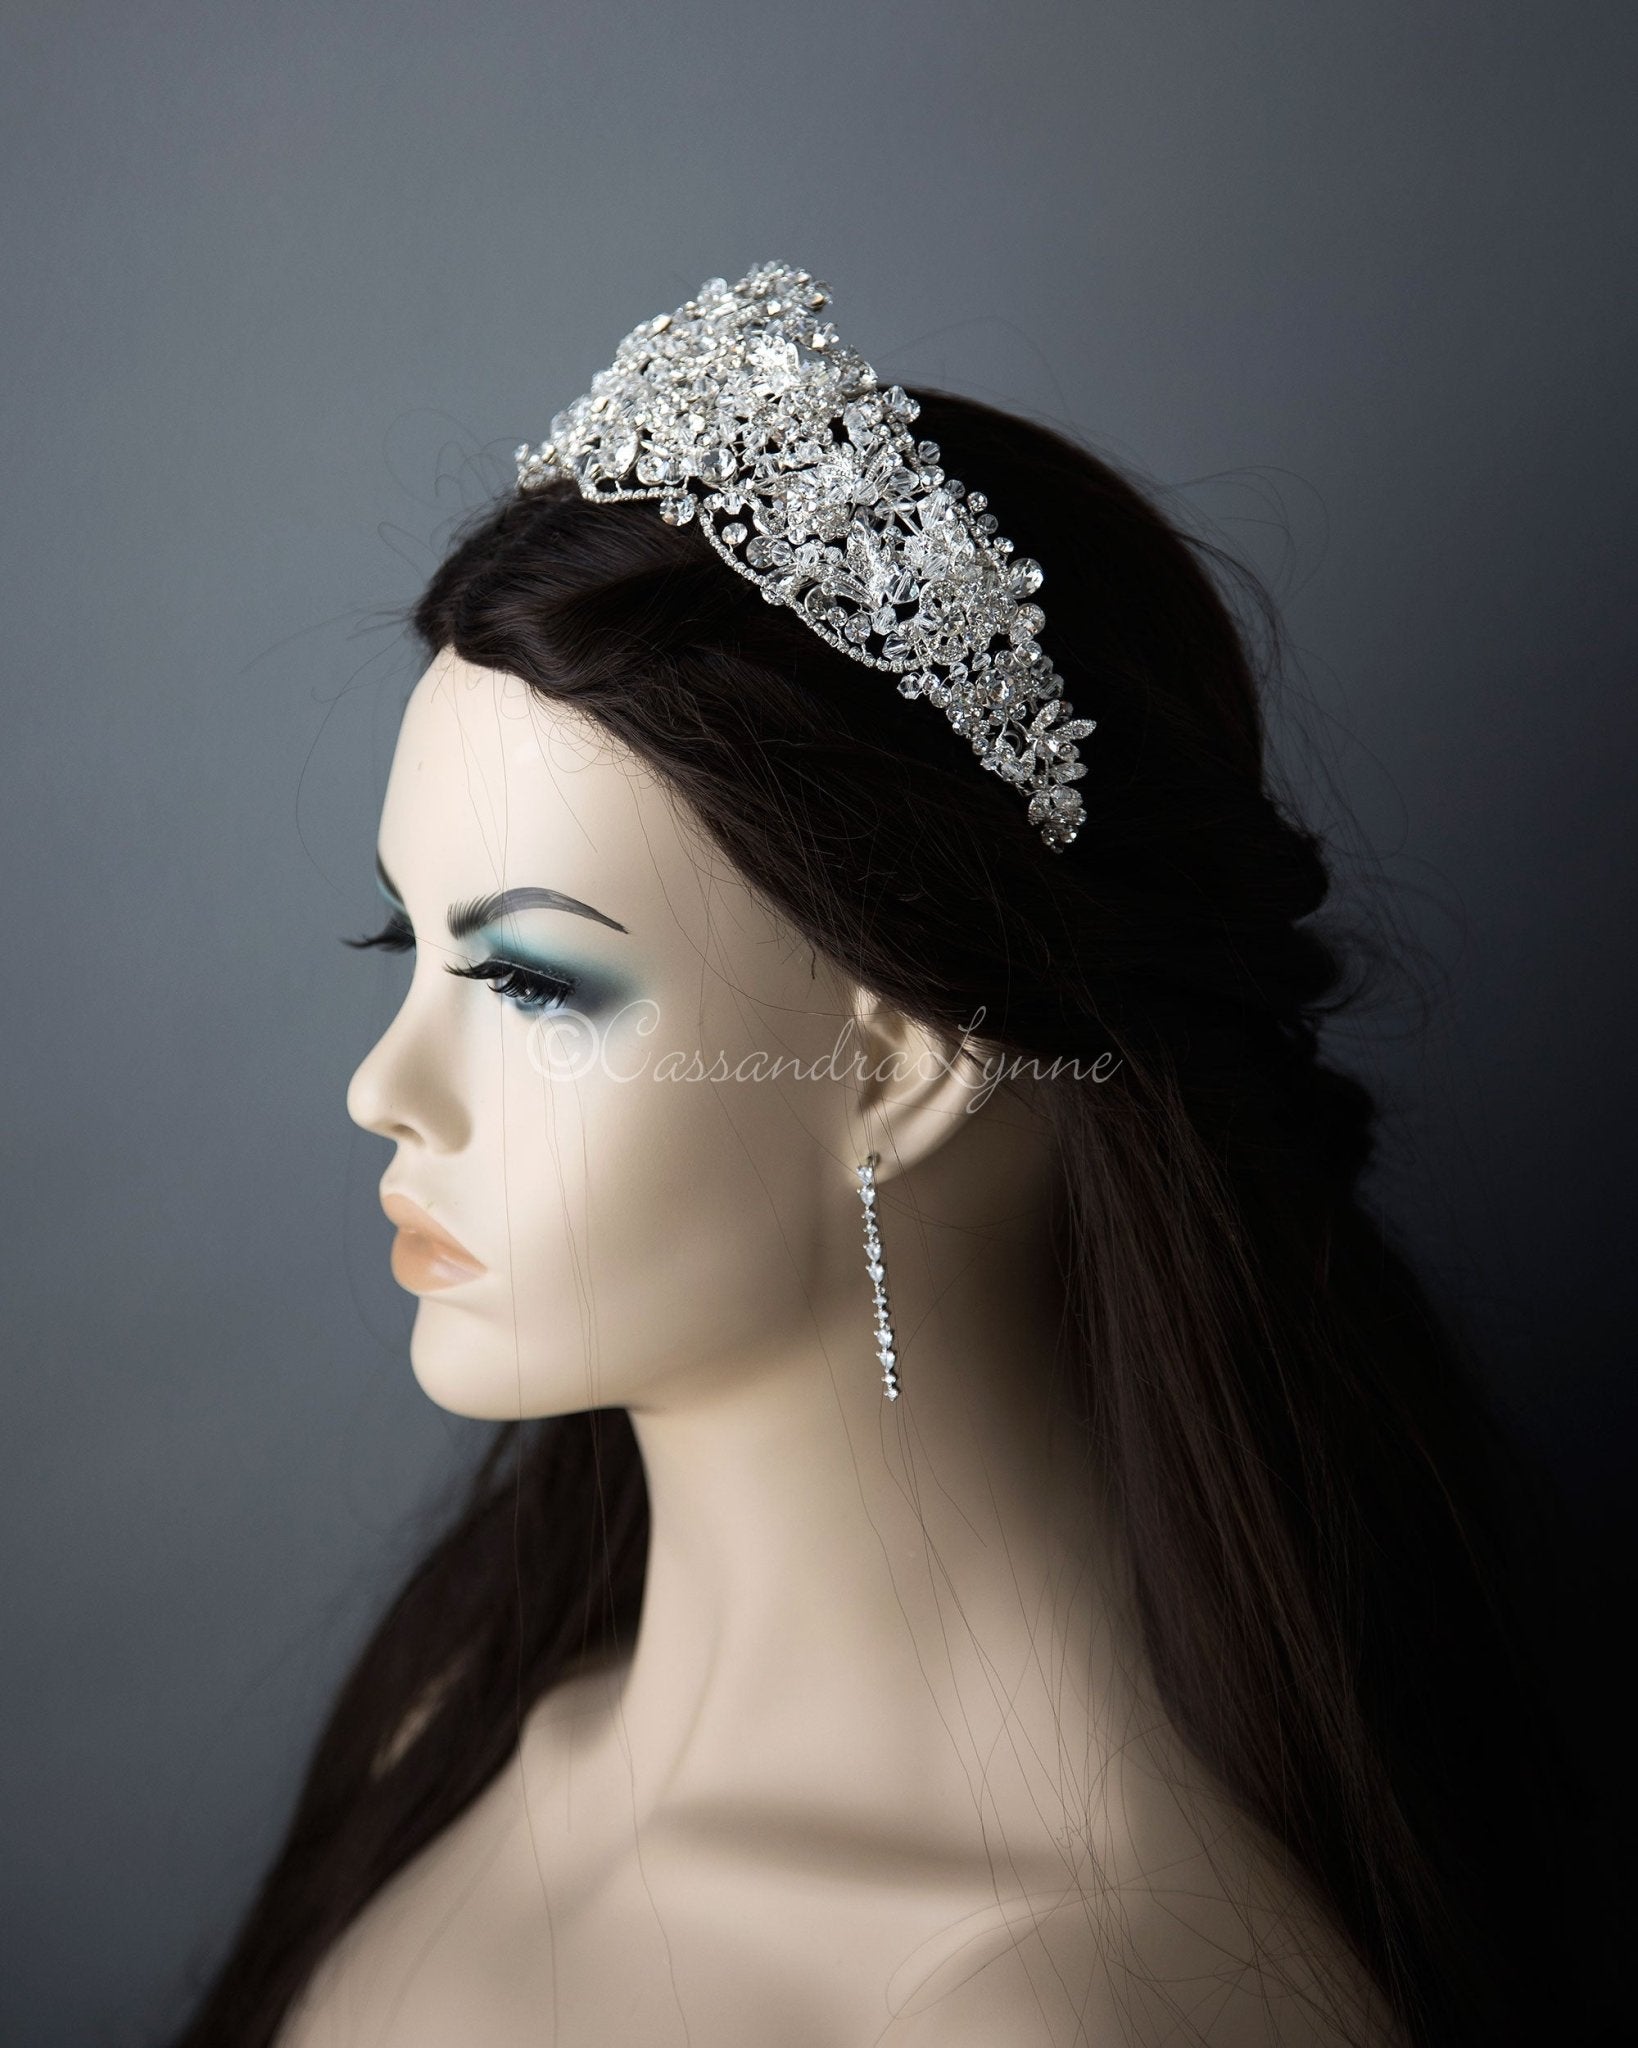 Wedding Headpiece of Crystal Beads and Jewels - Cassandra Lynne